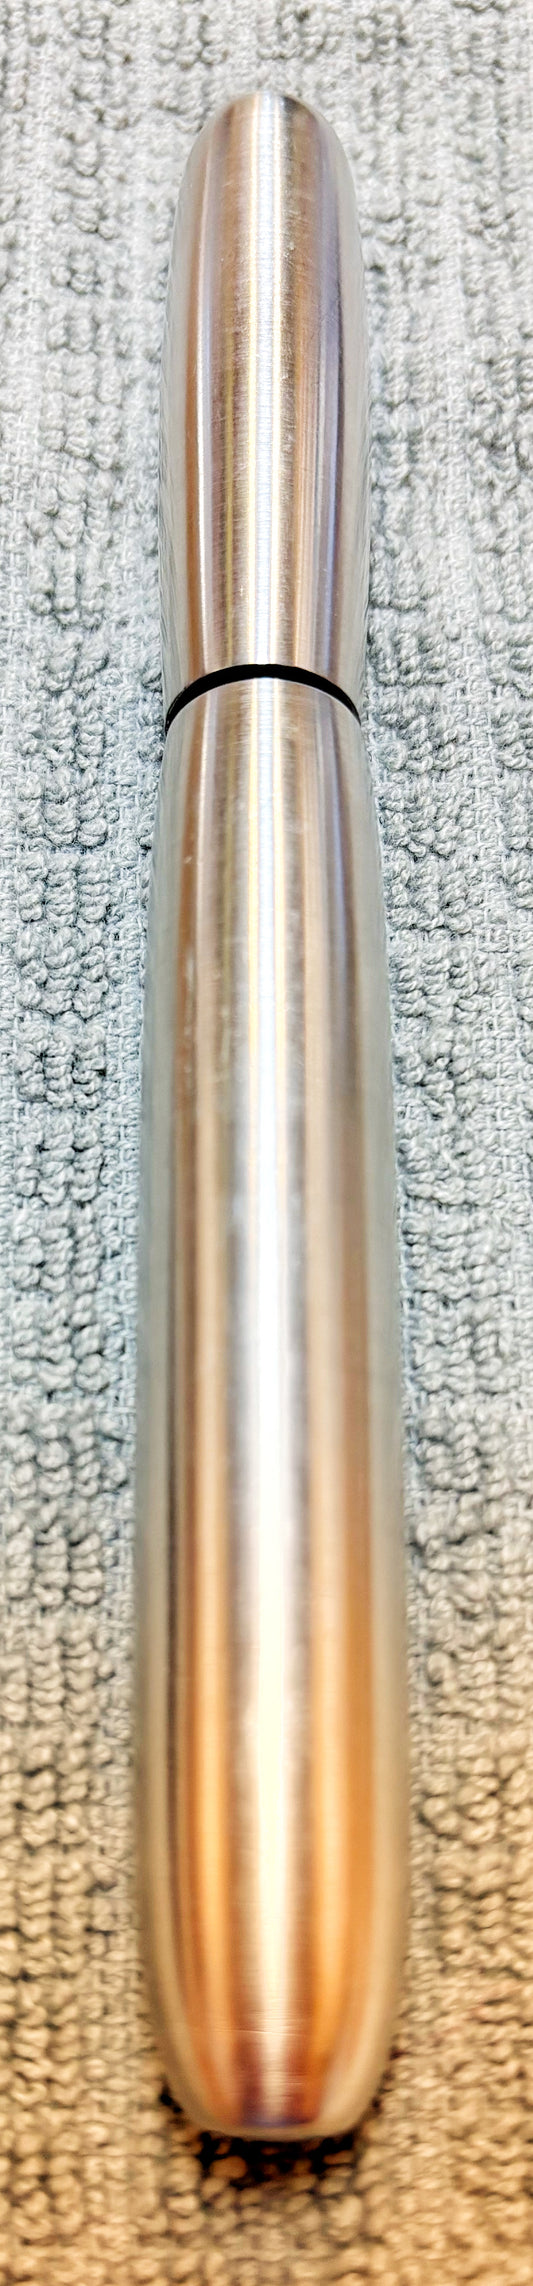 Aluminum Fountain Pen